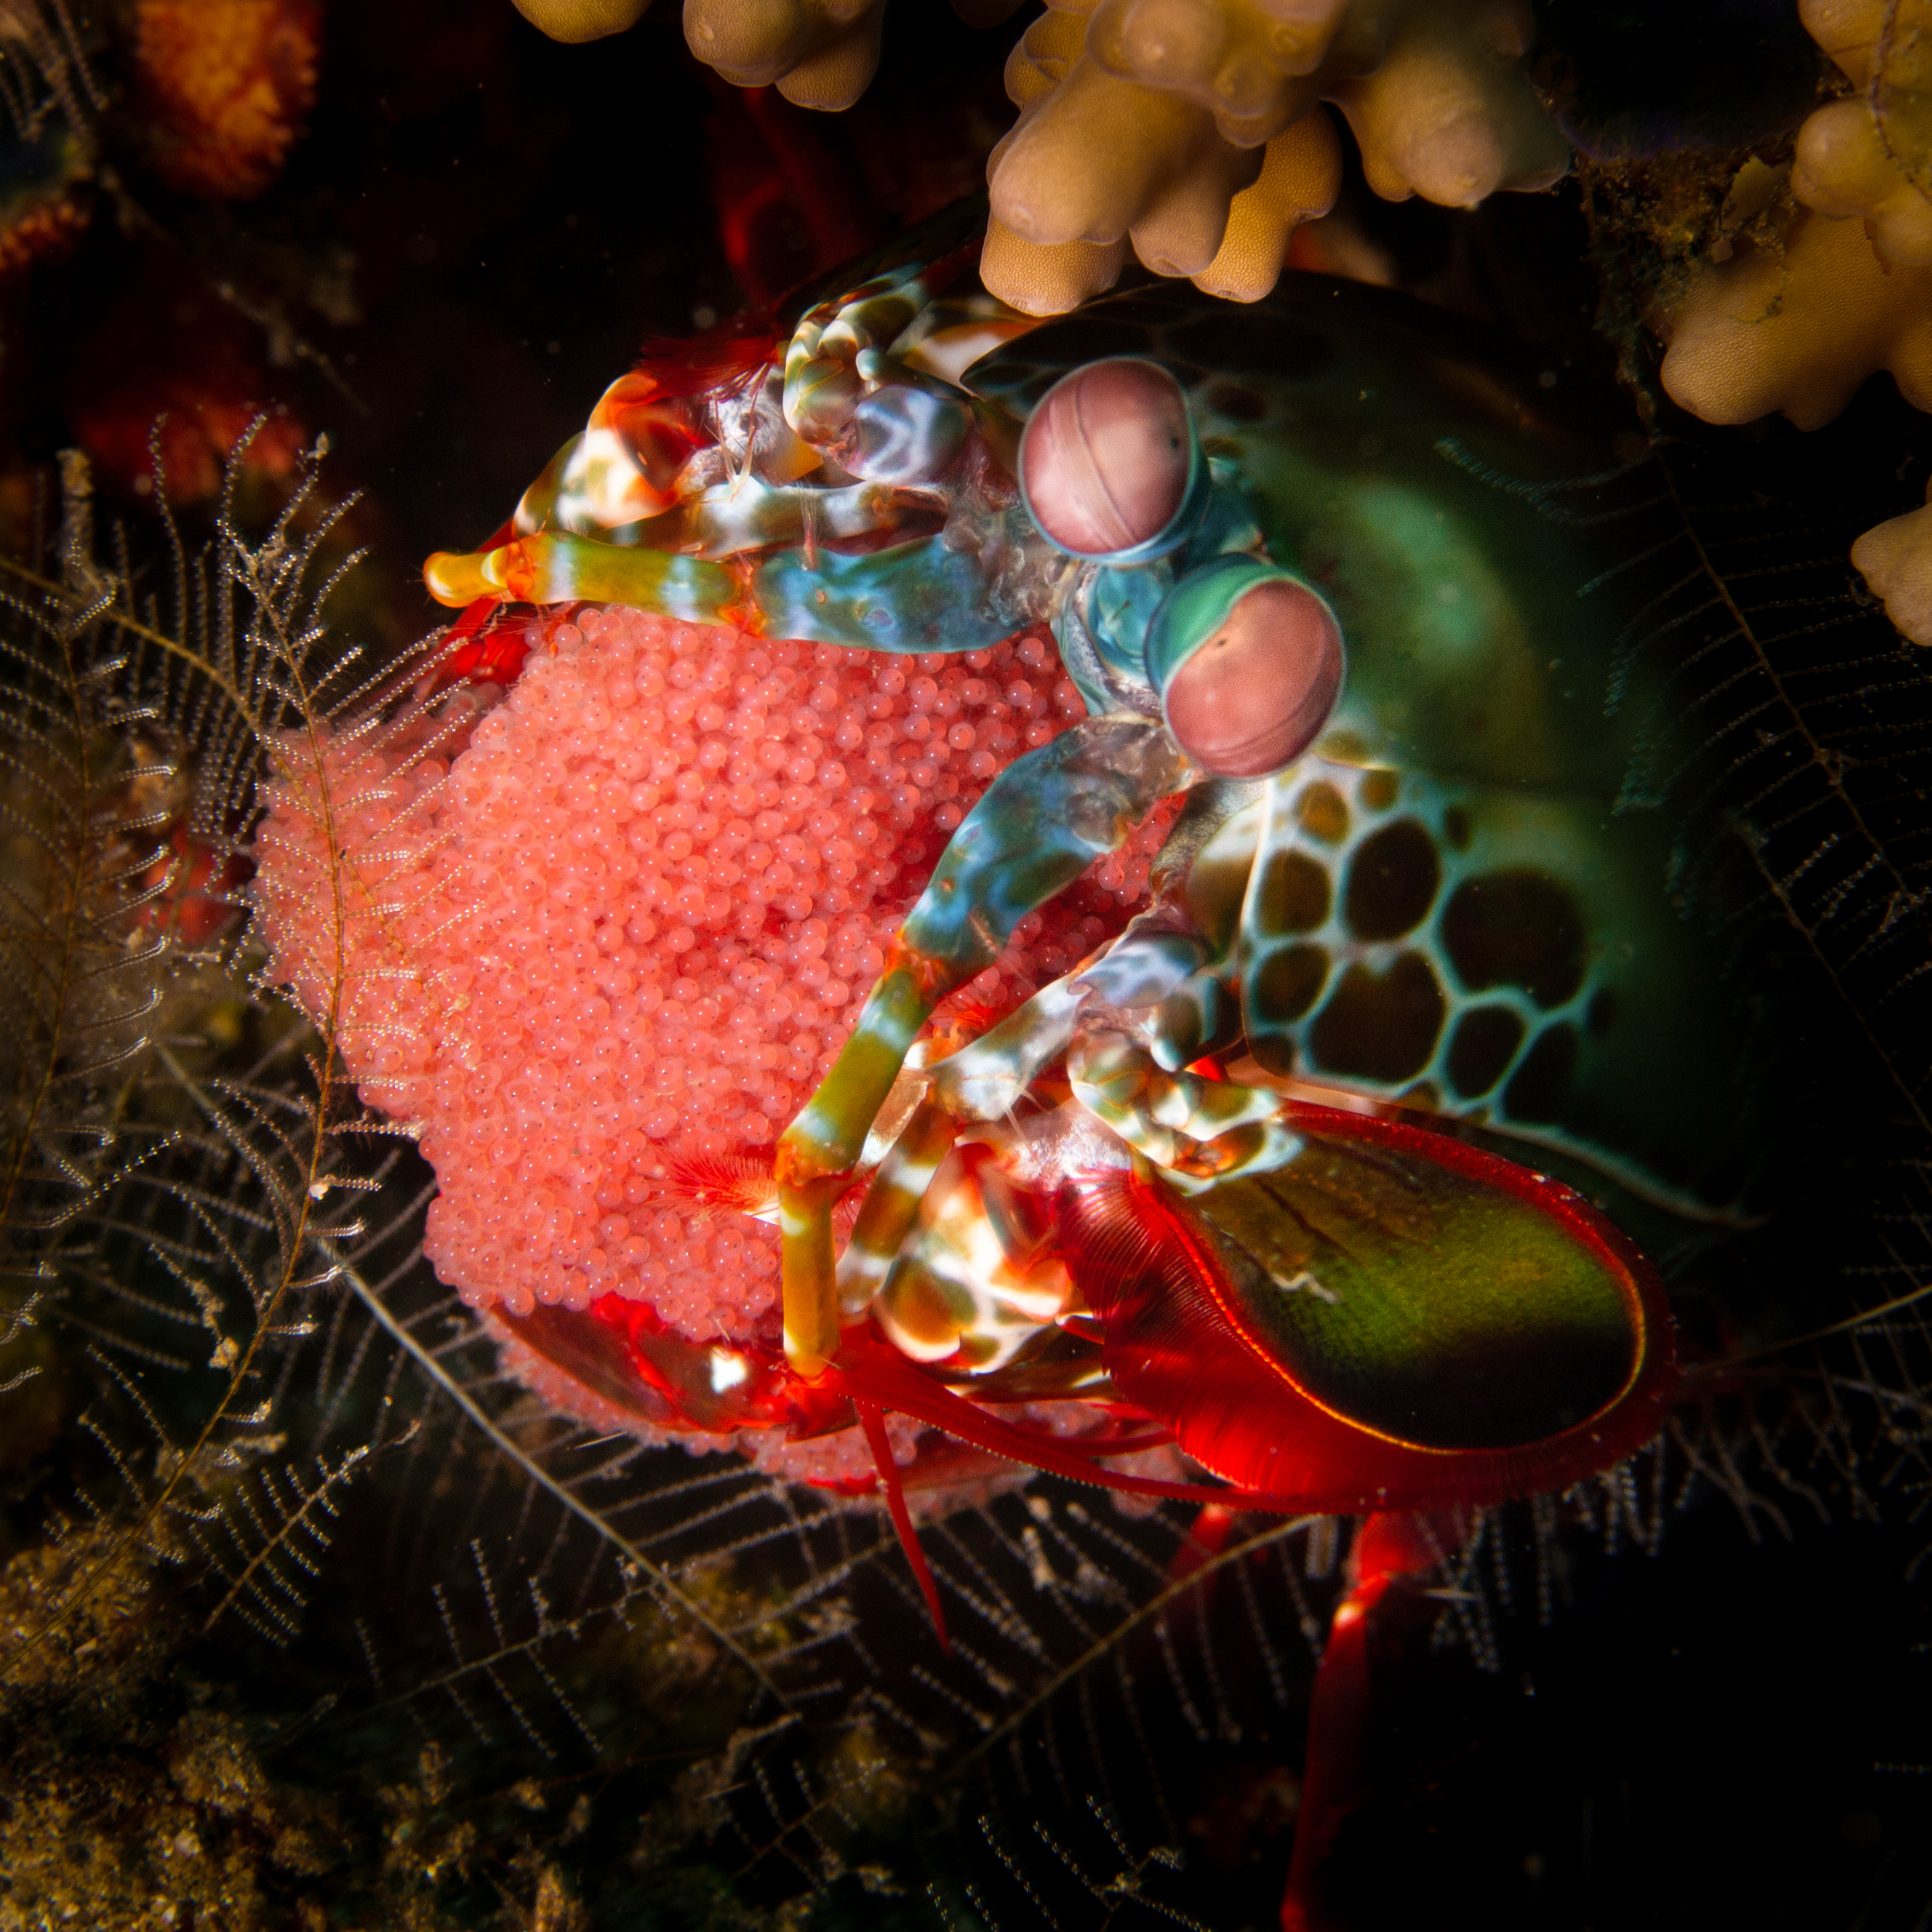 Mantis shrimp, by John Ares